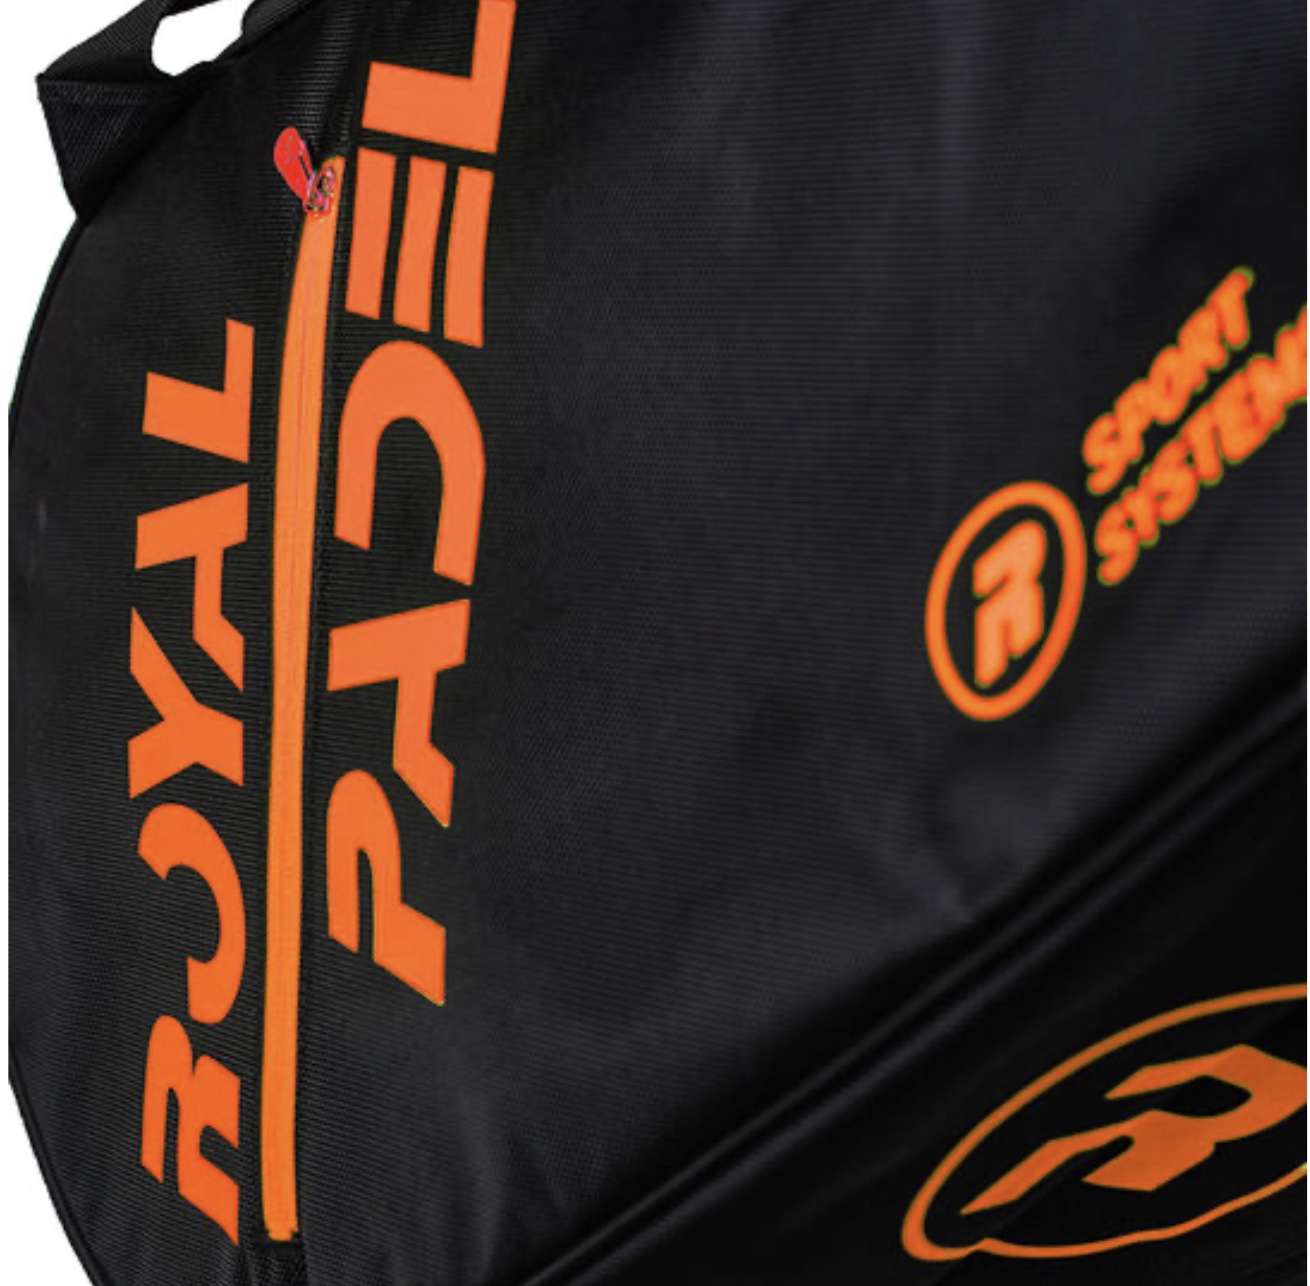 Royal Padel XL Orange Väska